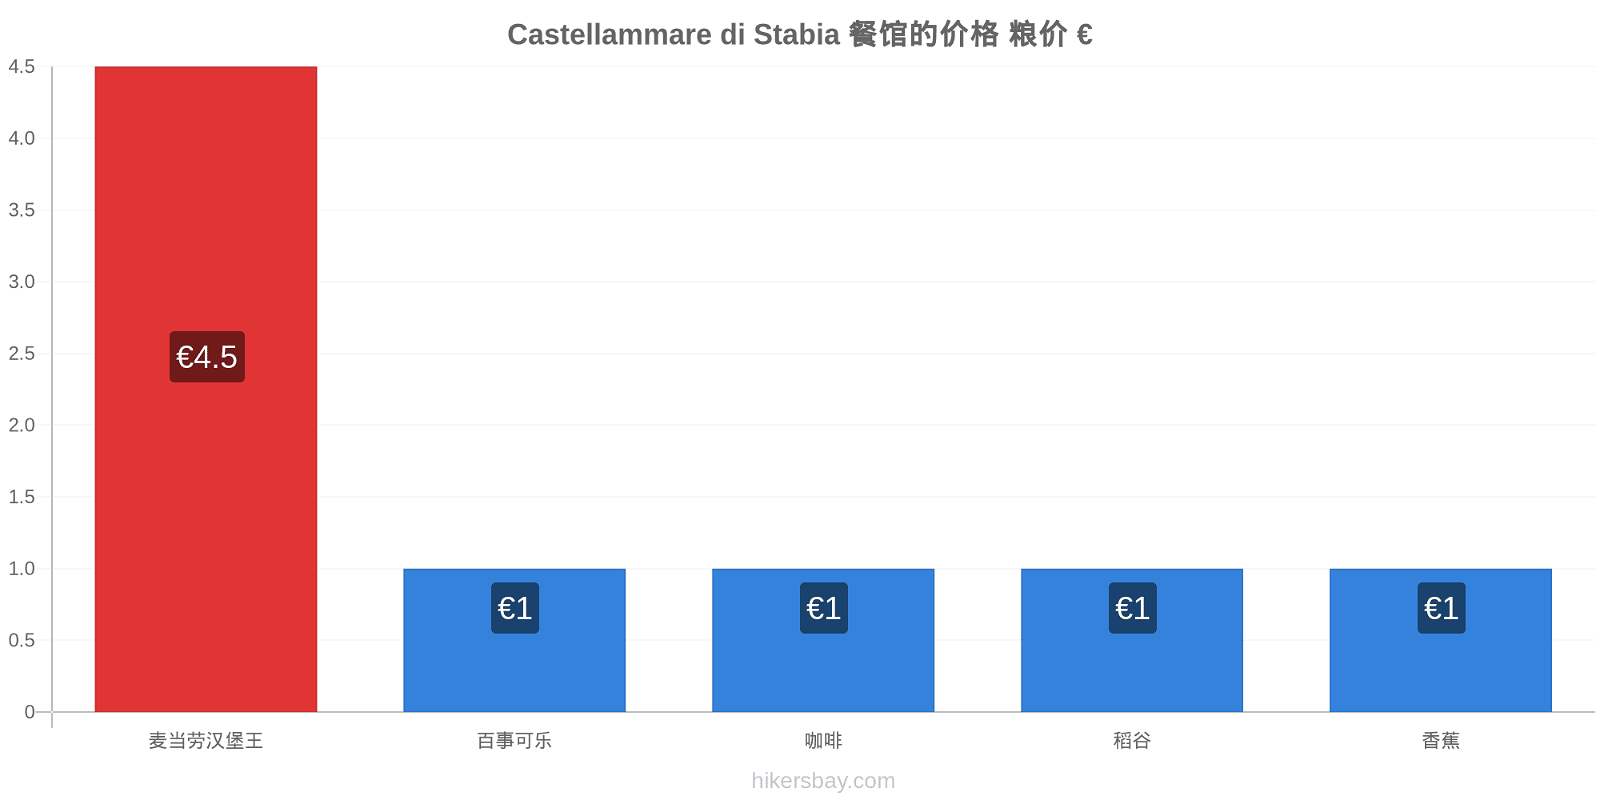 Castellammare di Stabia 价格变动 hikersbay.com